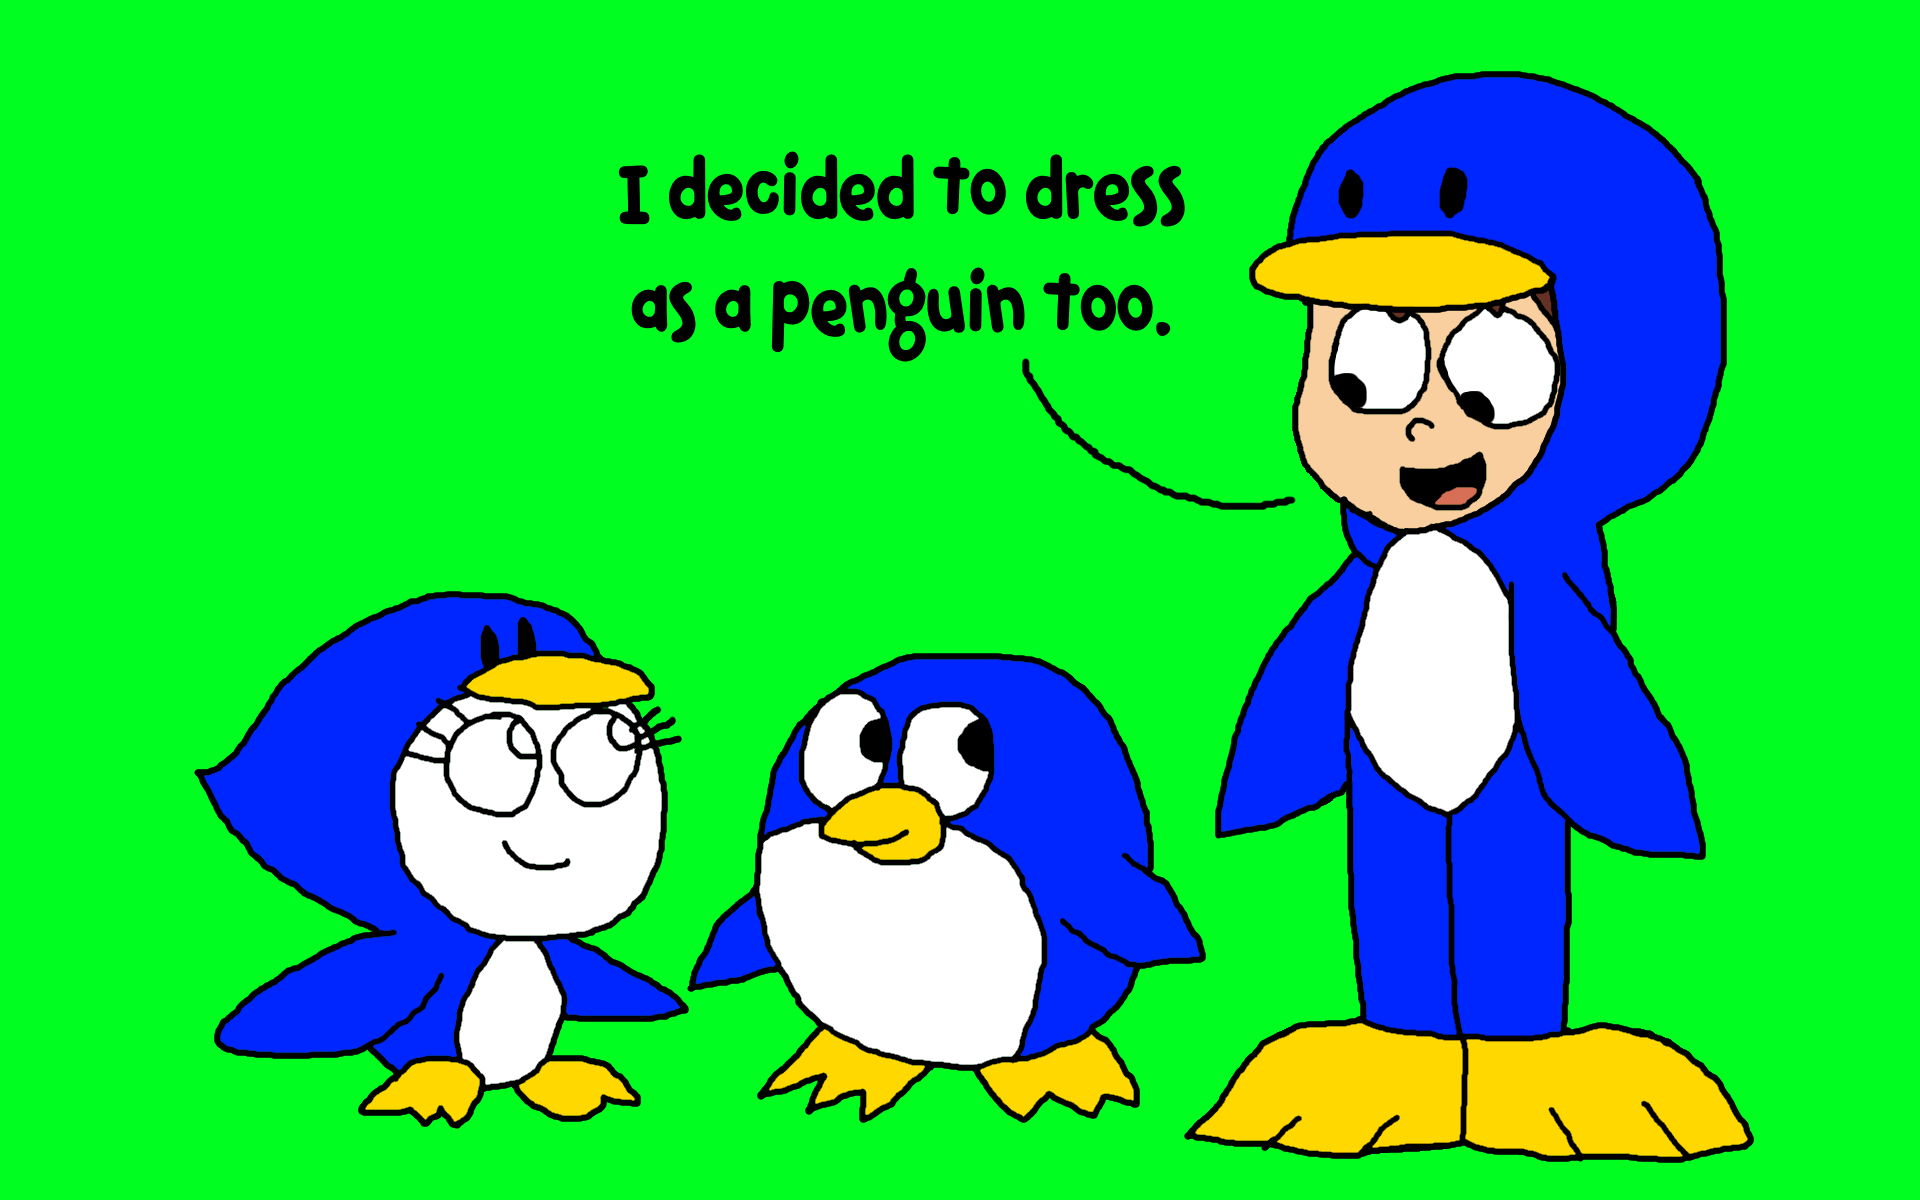 Club Penguin Meme by Azulzinho35 on DeviantArt